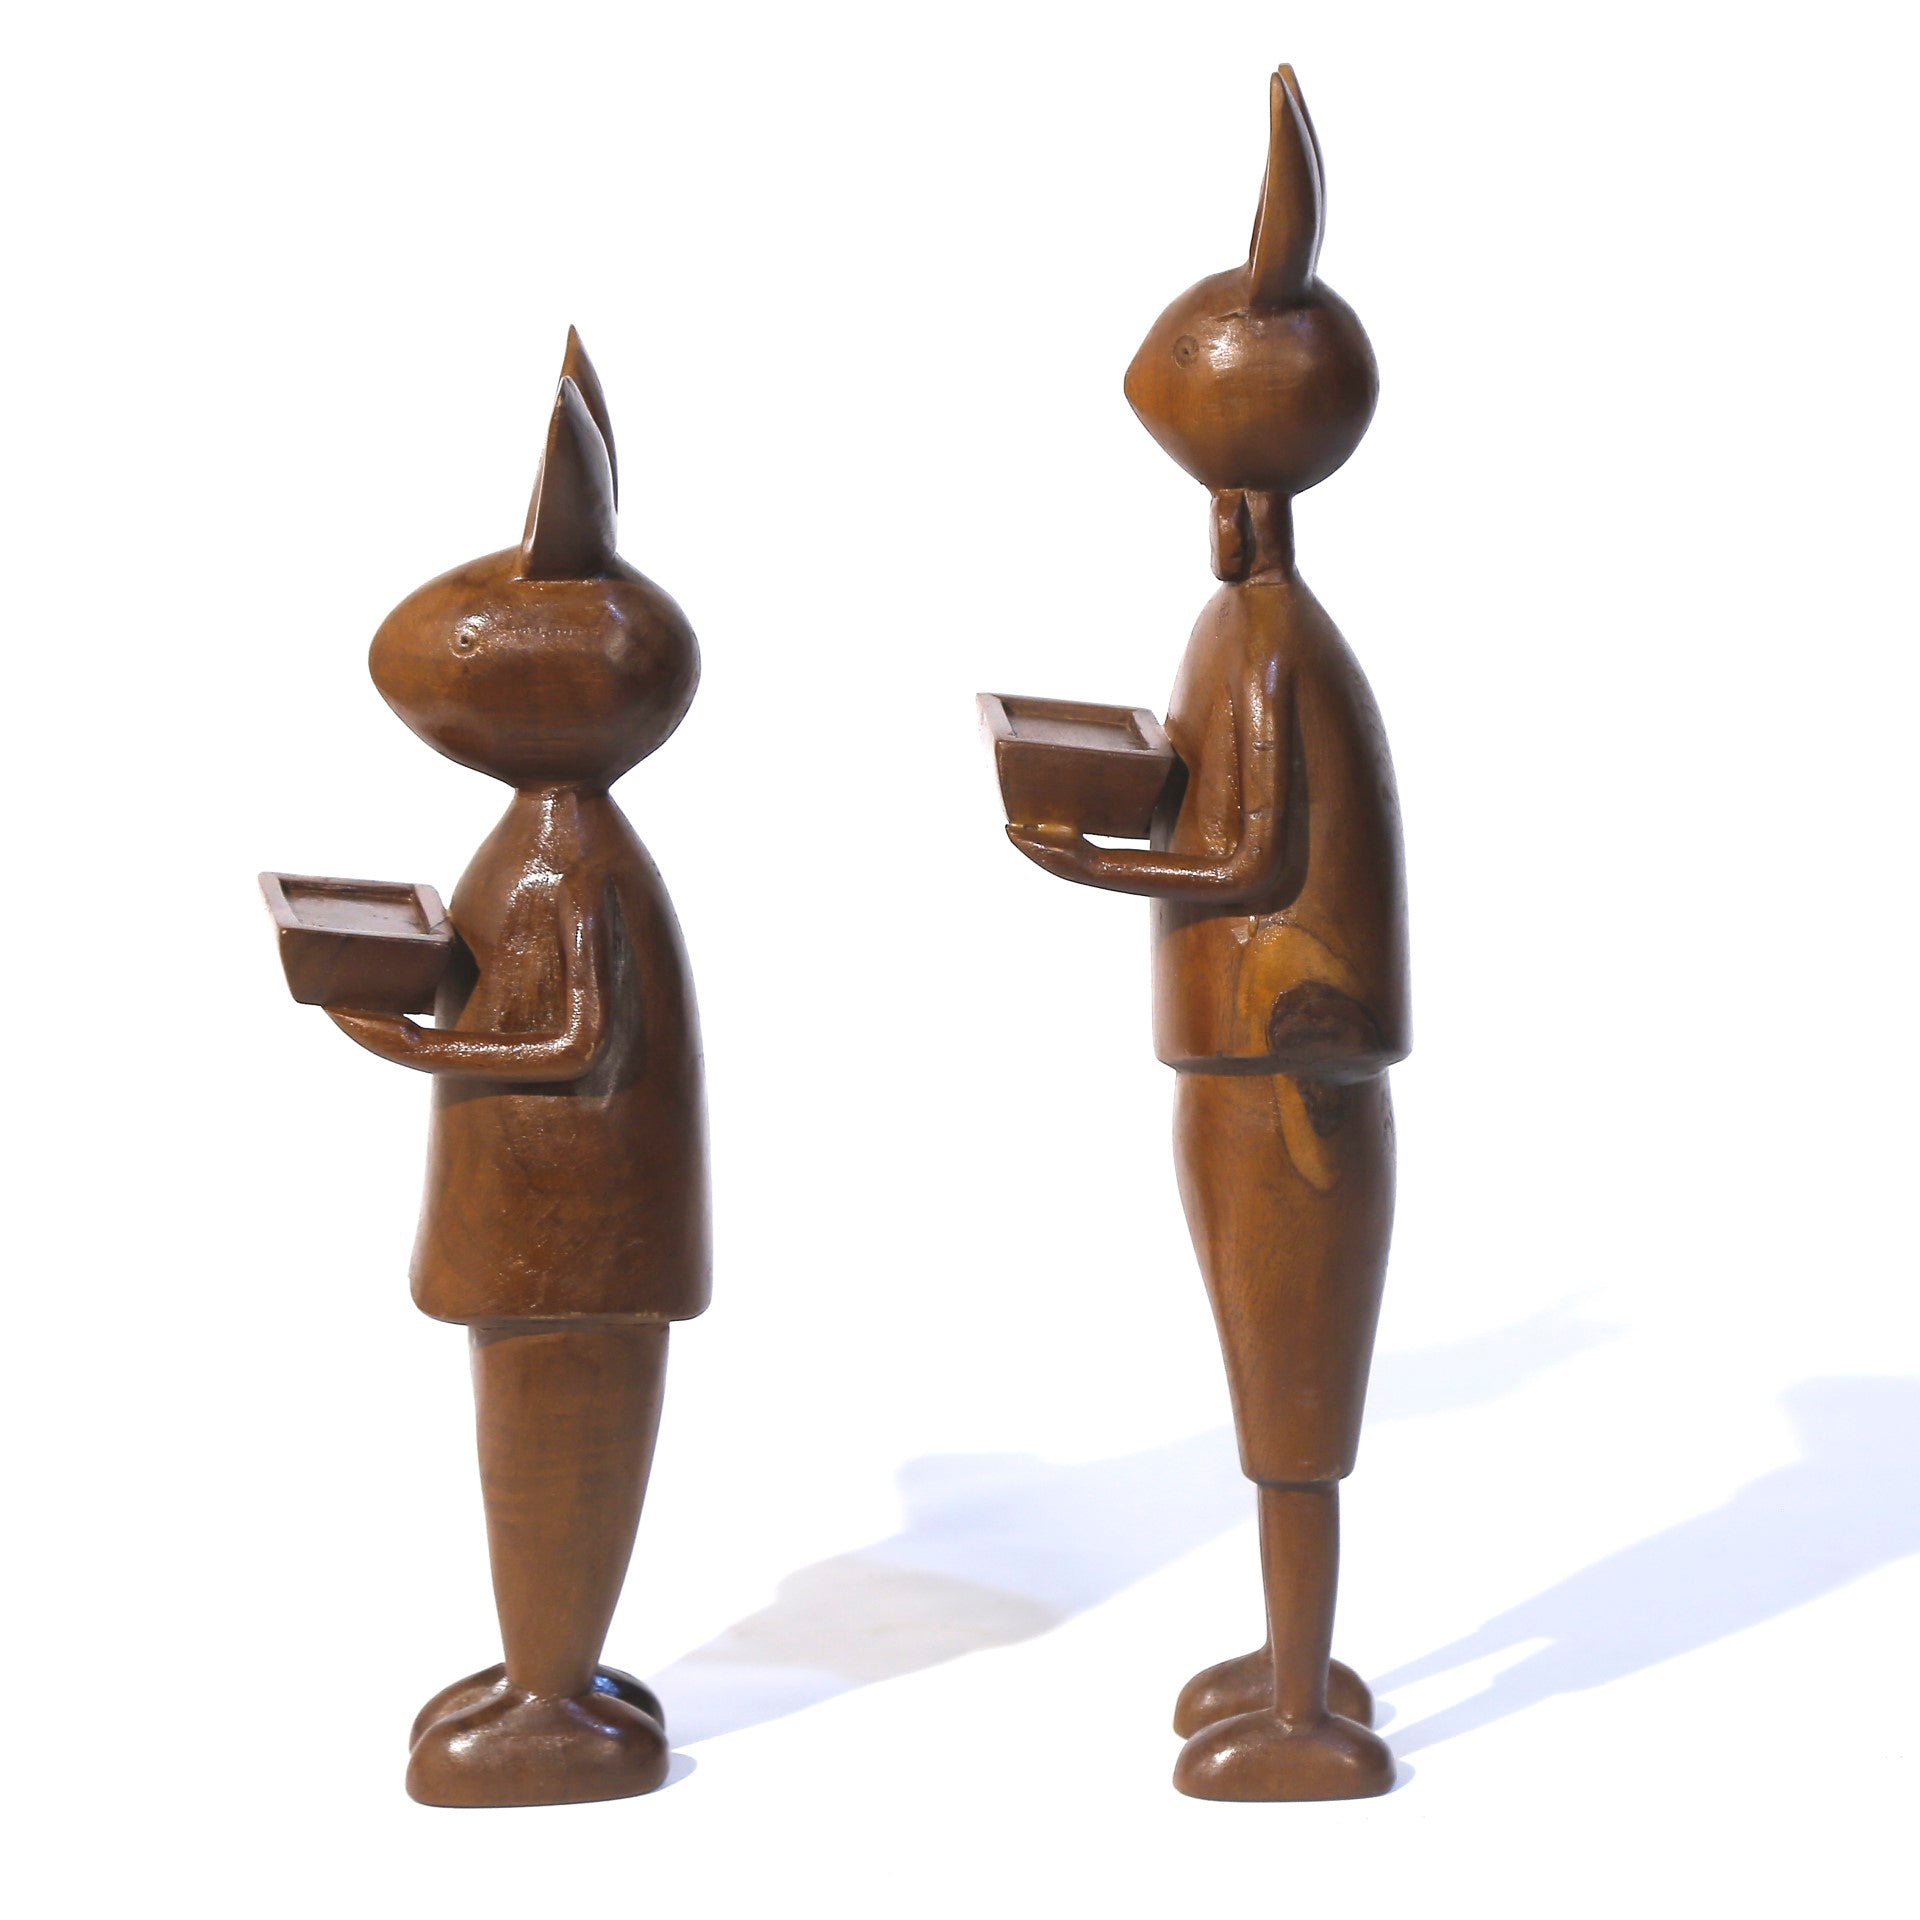 Wooden Scholar Rabbit Figurine Animal Figurine